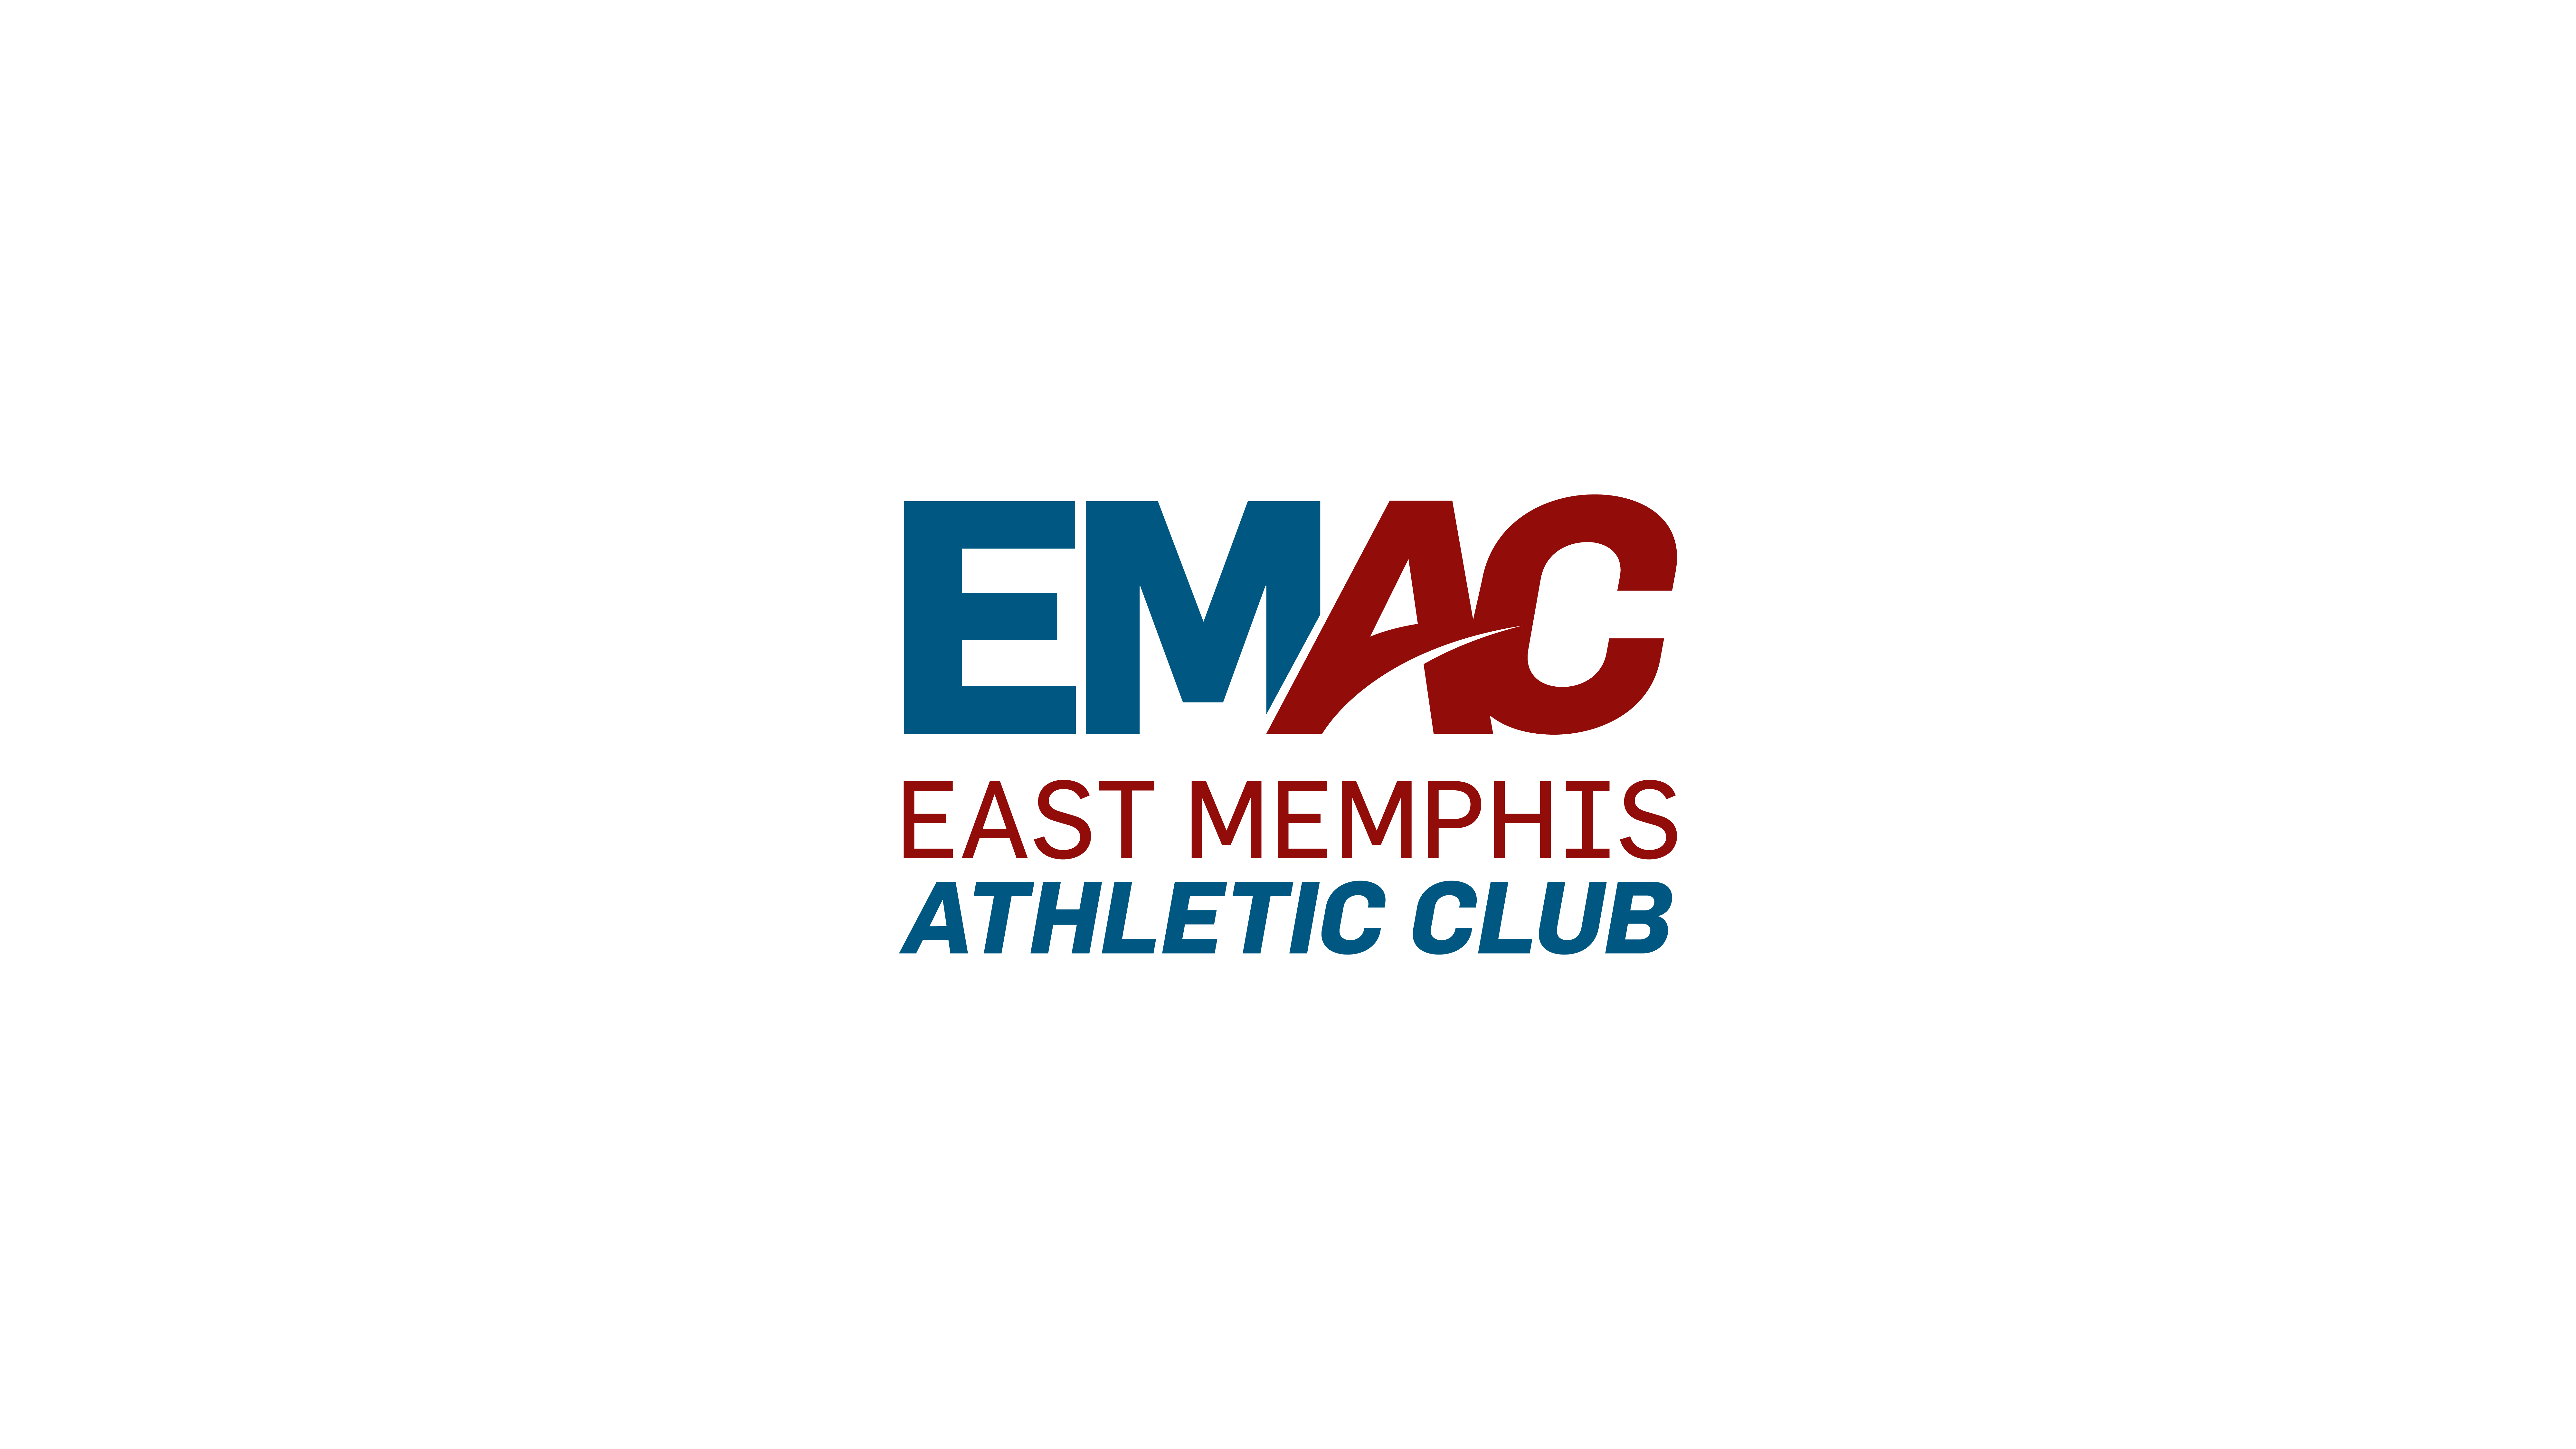 East Memphis Athletic Club logo